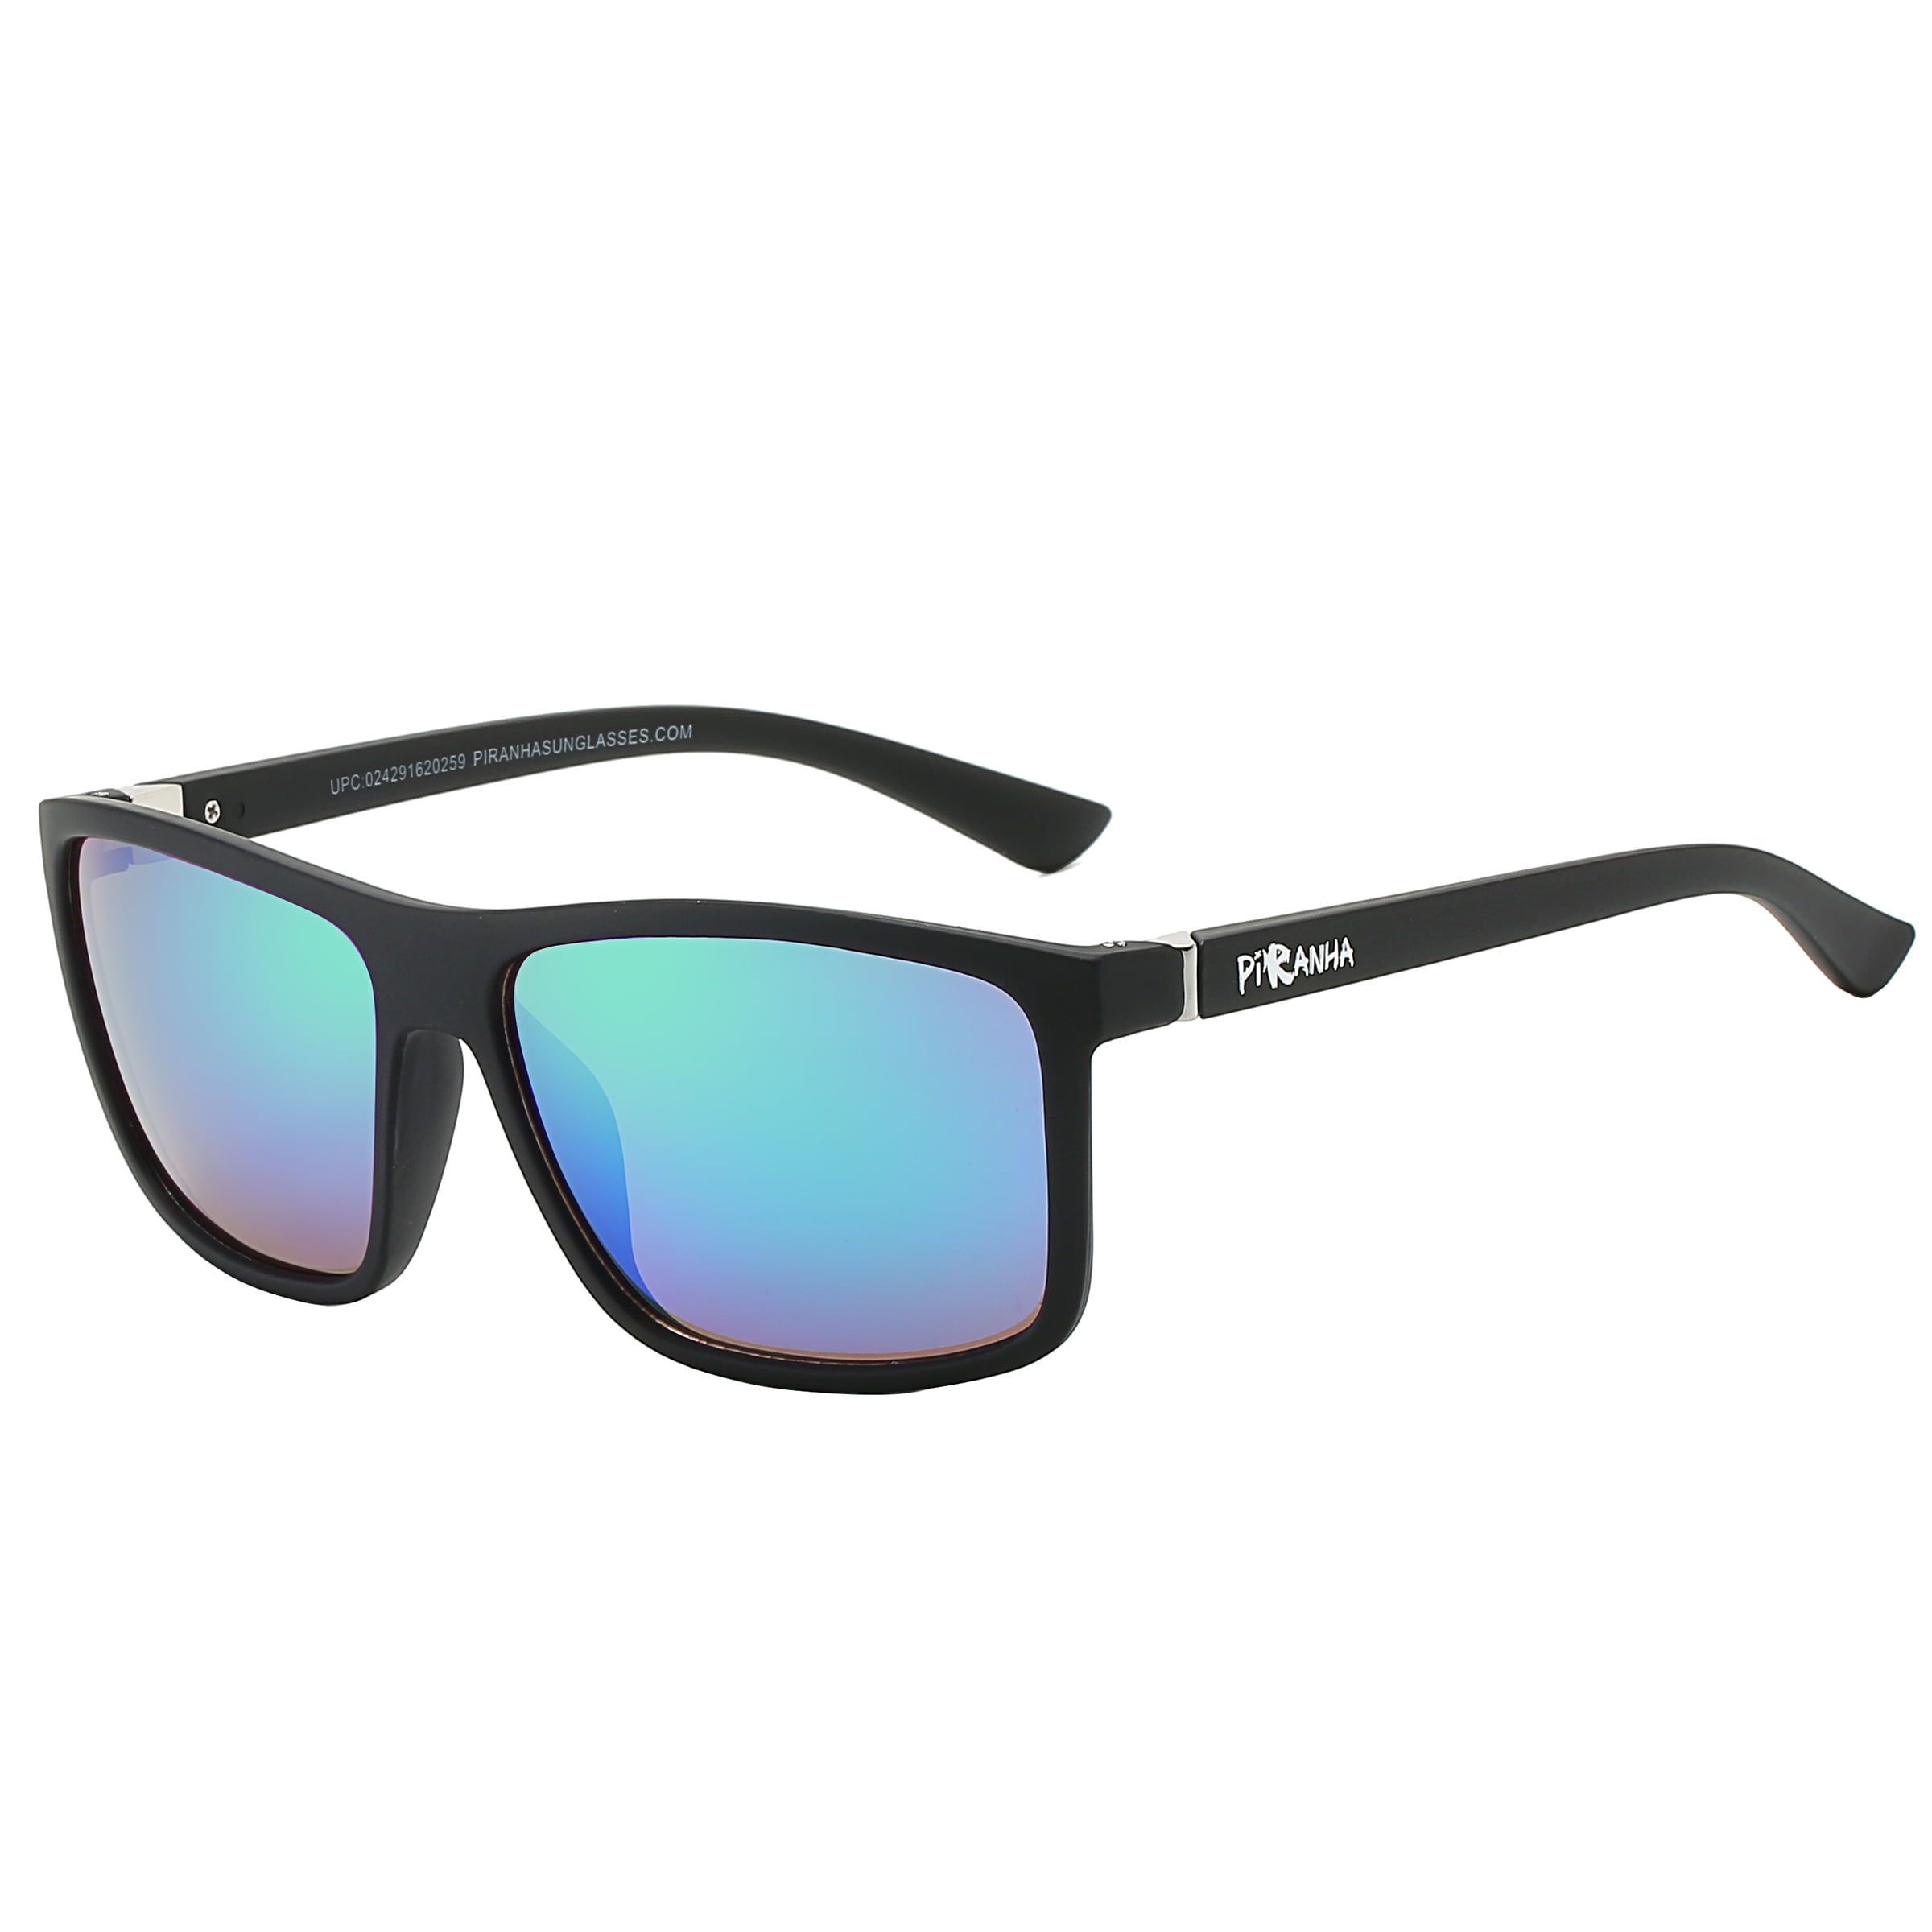 Piranha Eyewear Reaction Black Classic Sunglasses for Men and